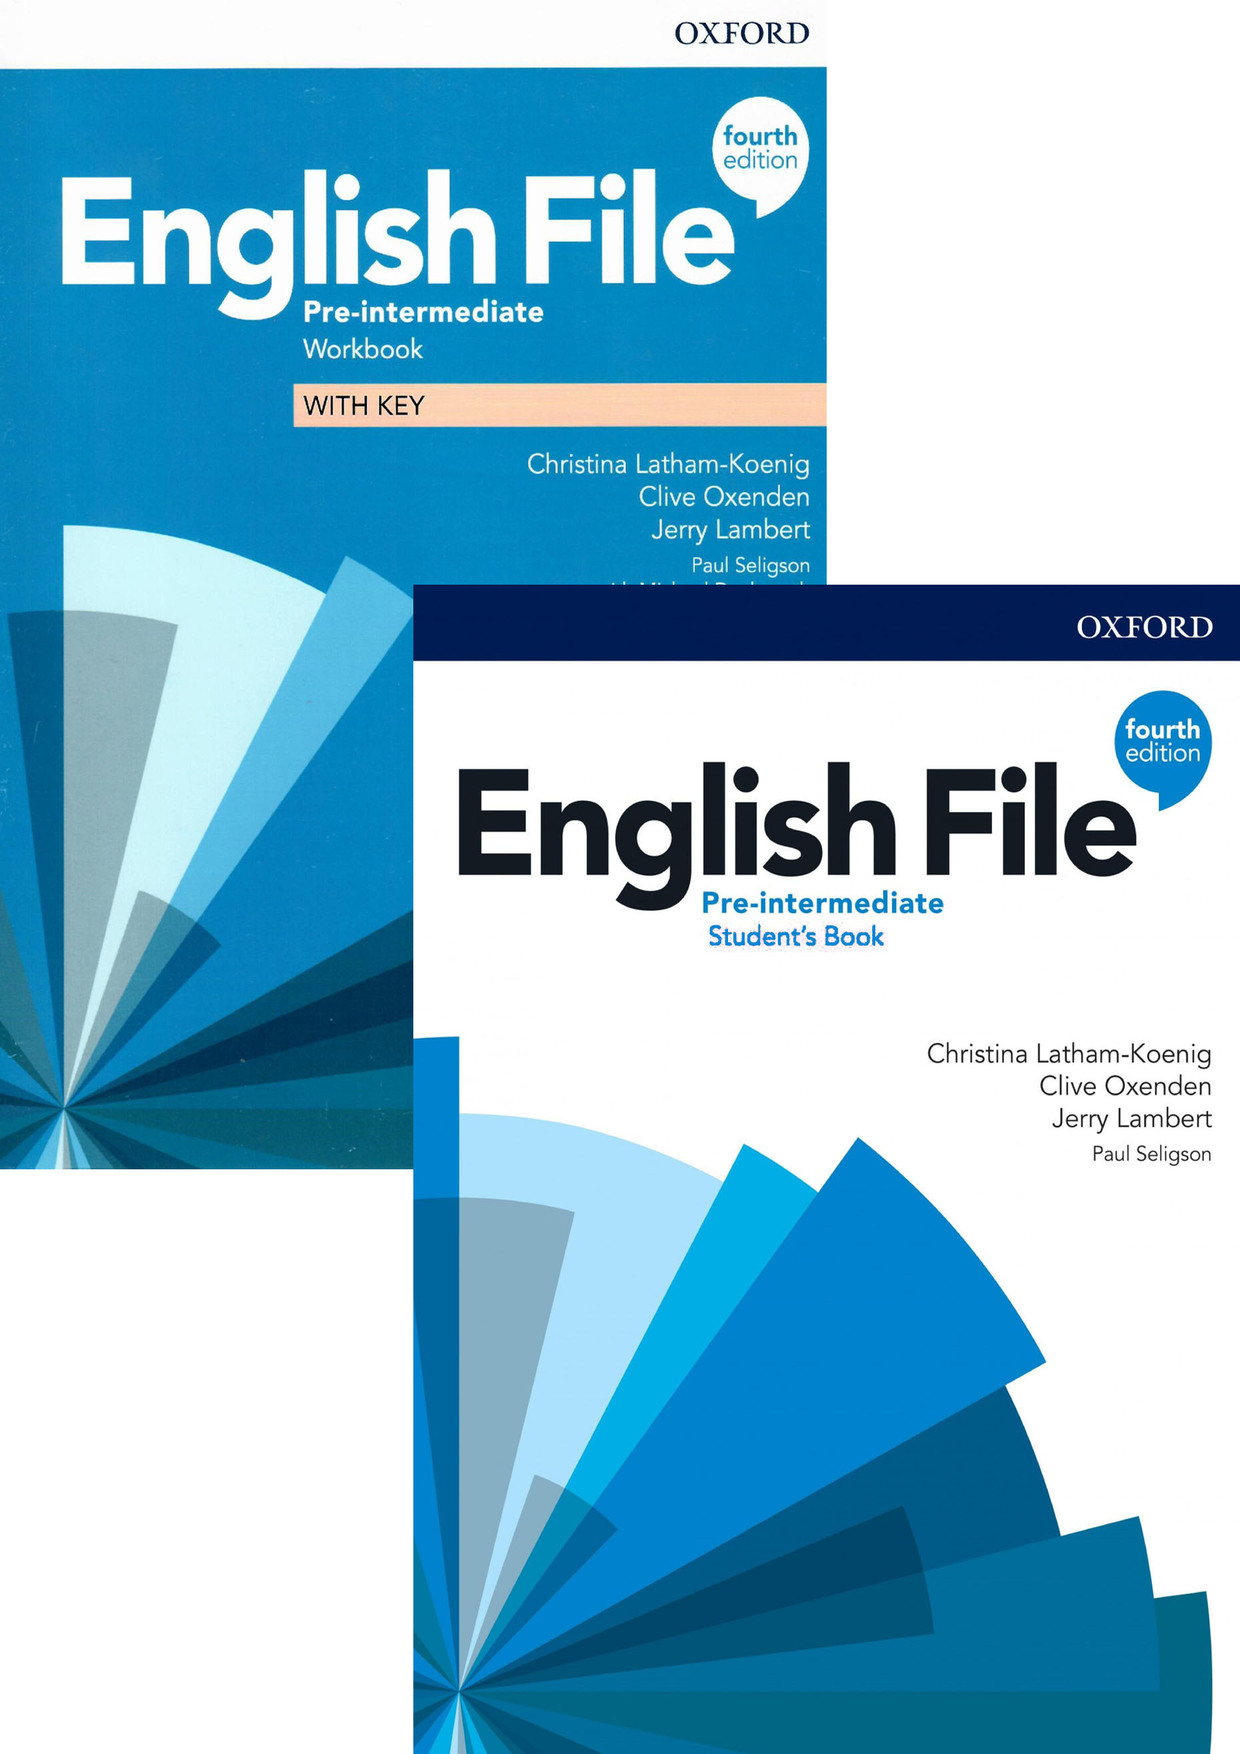 New english intermediate. EF pre Intermediate 4th Edition. English file Elementary 4th Edition уровень. English file 4th Edition pre. English file pre-Intermediate 4th.